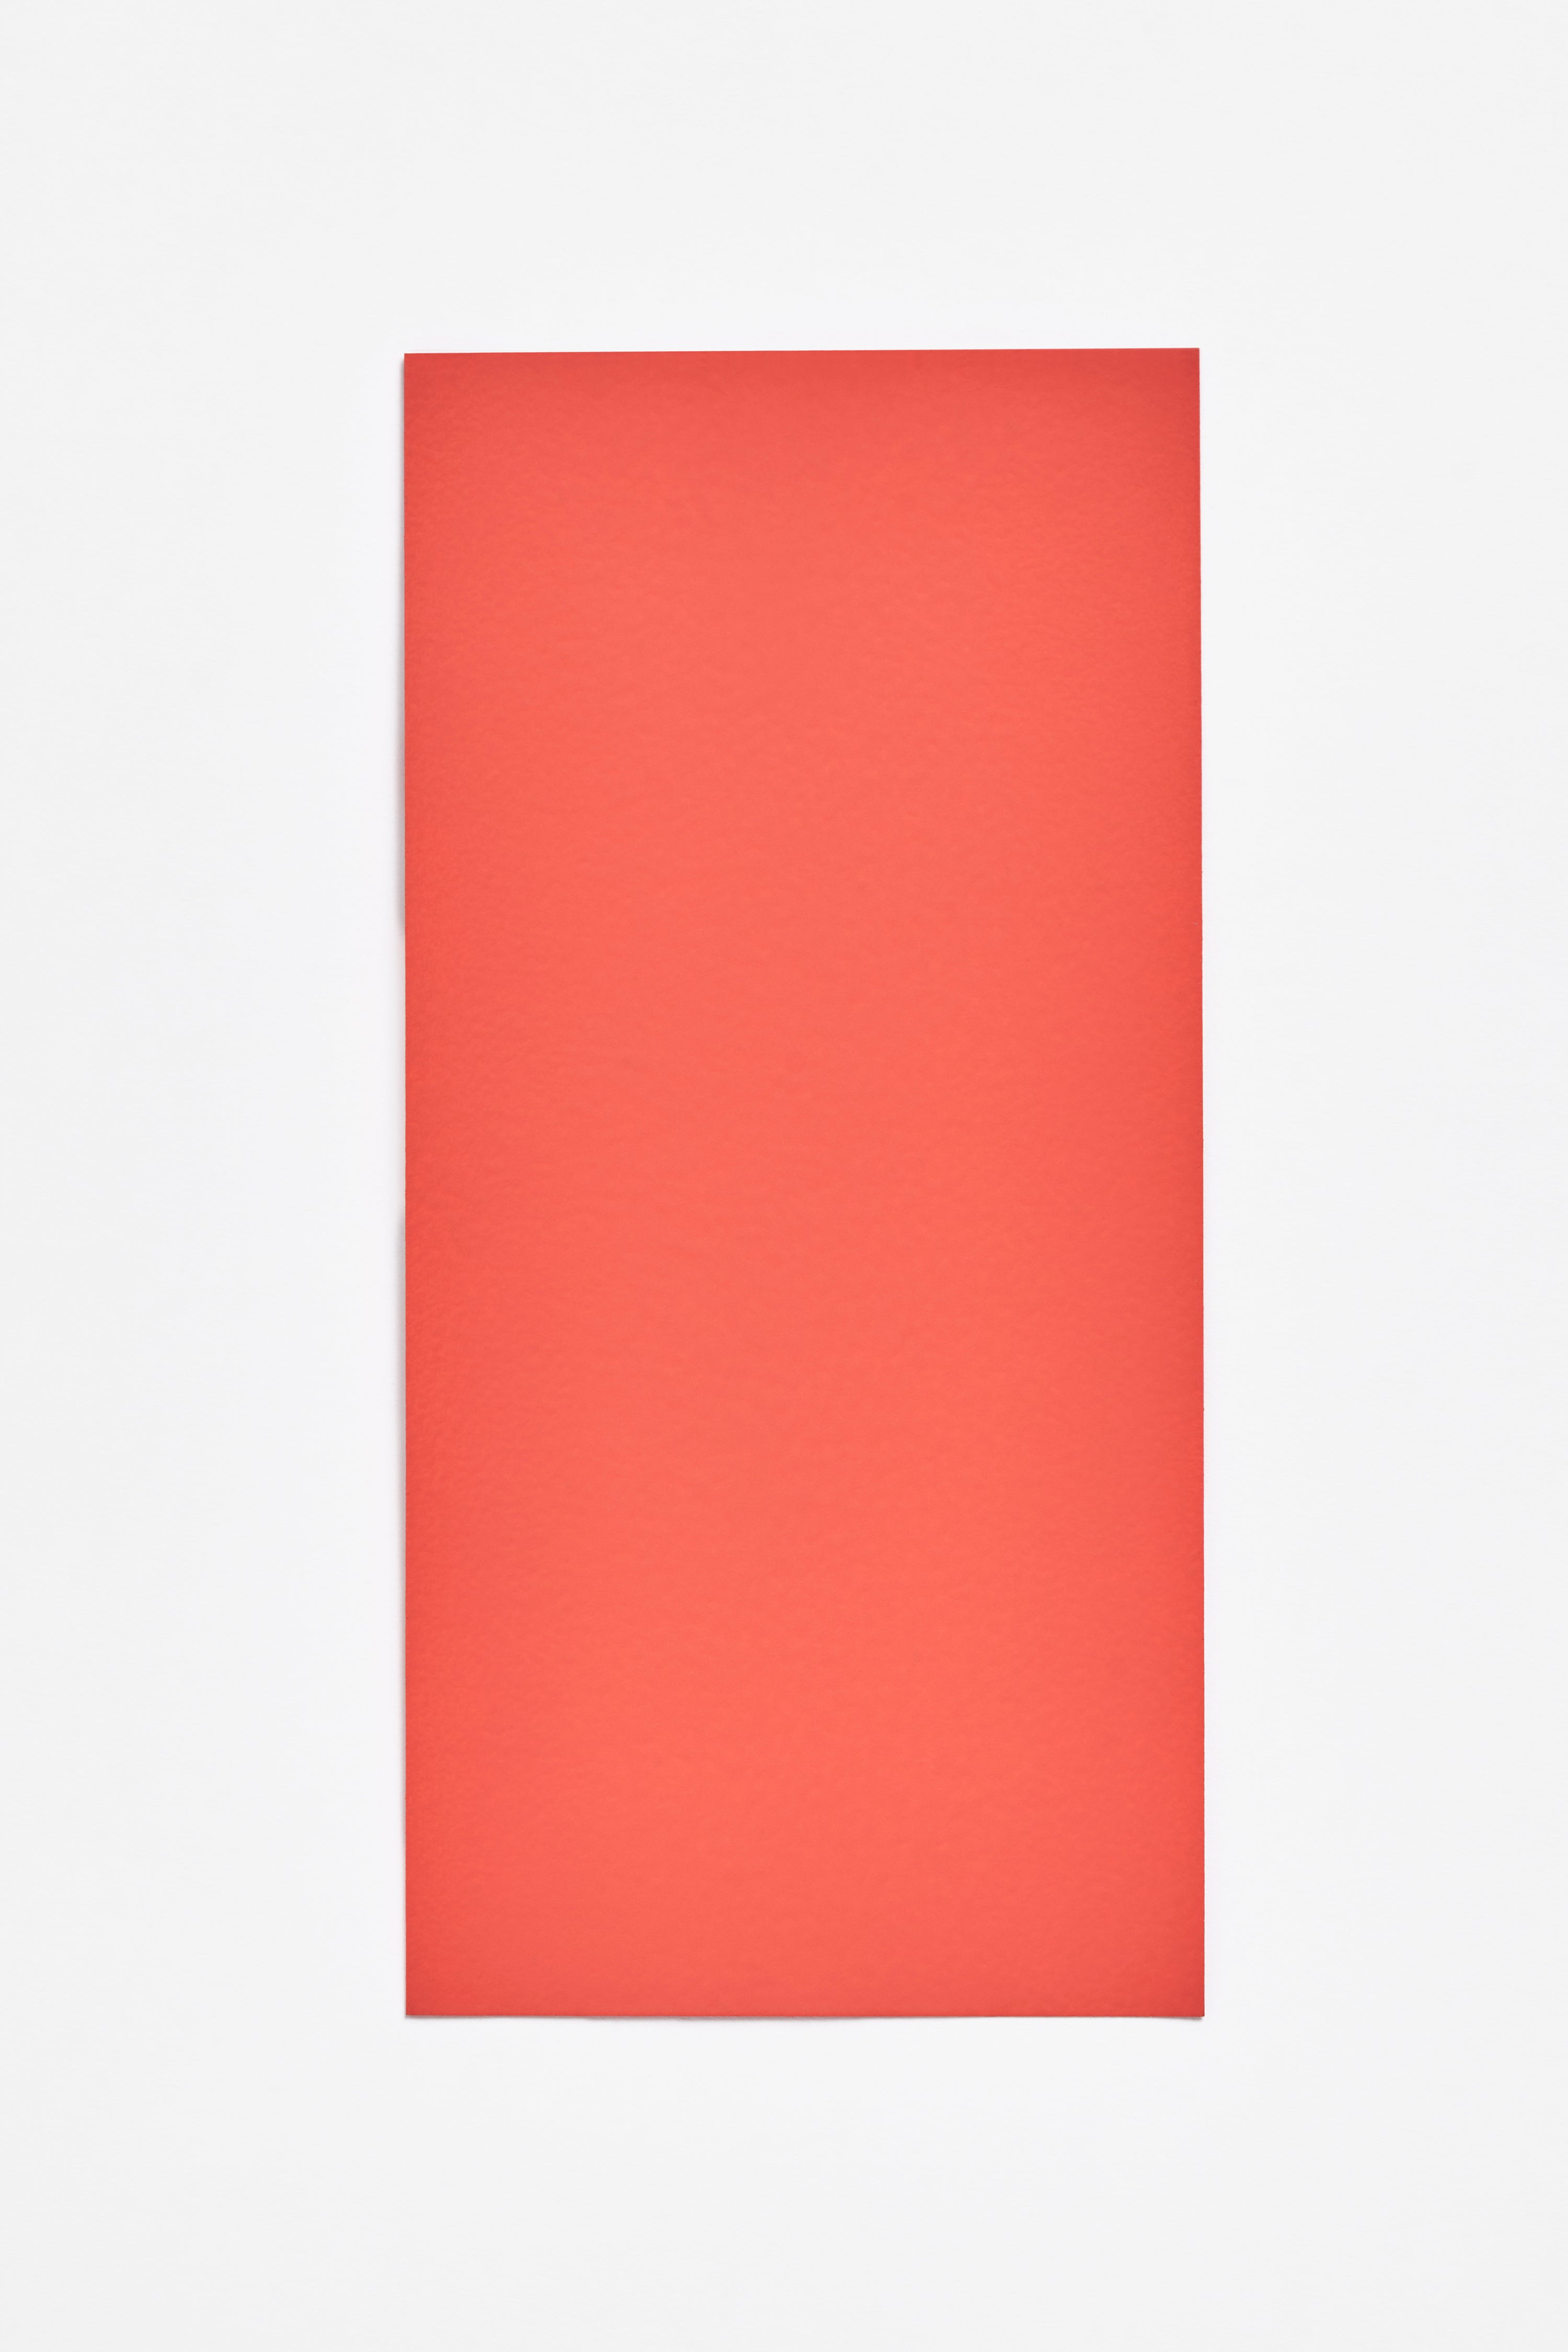 Tomate Bio — a paint colour developed by Inga Sempé for Blēo